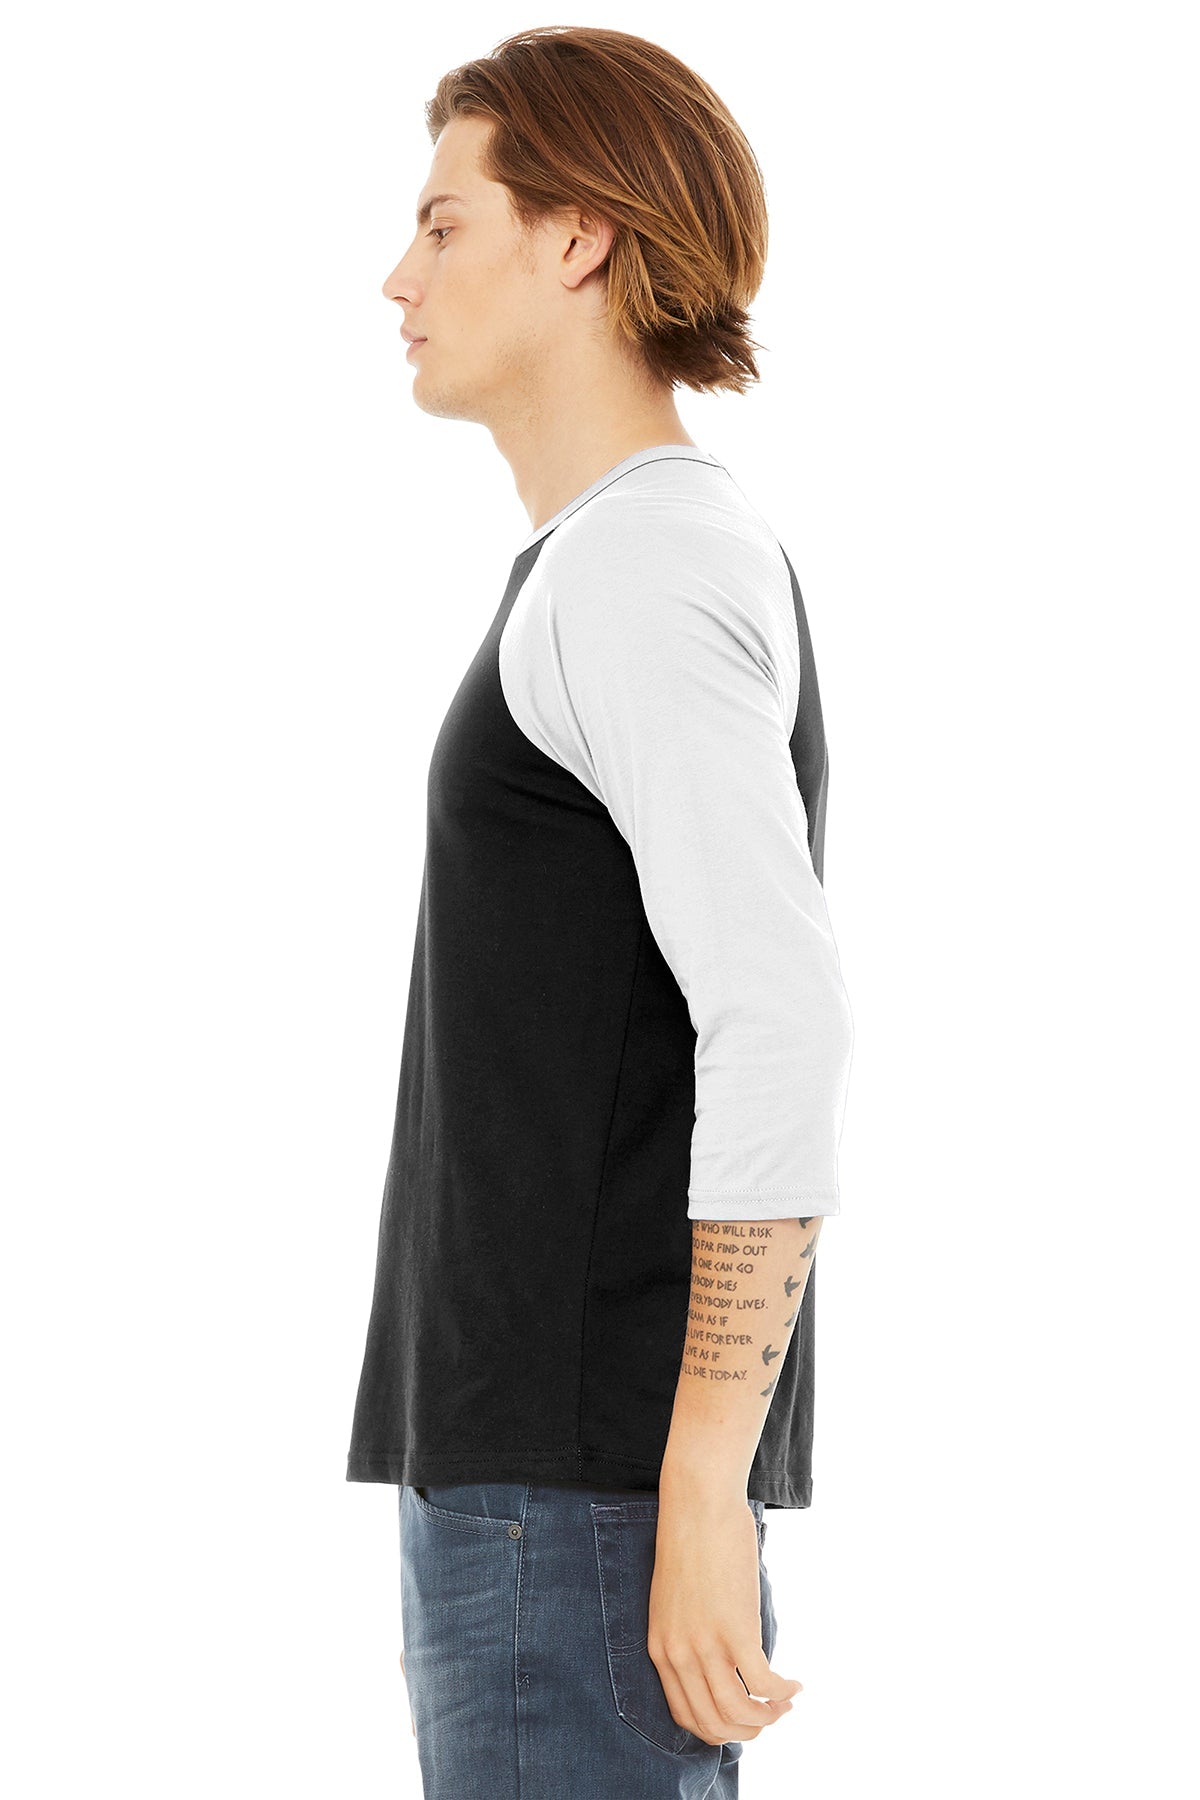 bella + canvas unisex 3/4-sleeve baseball t-shirt 3200 black/ white